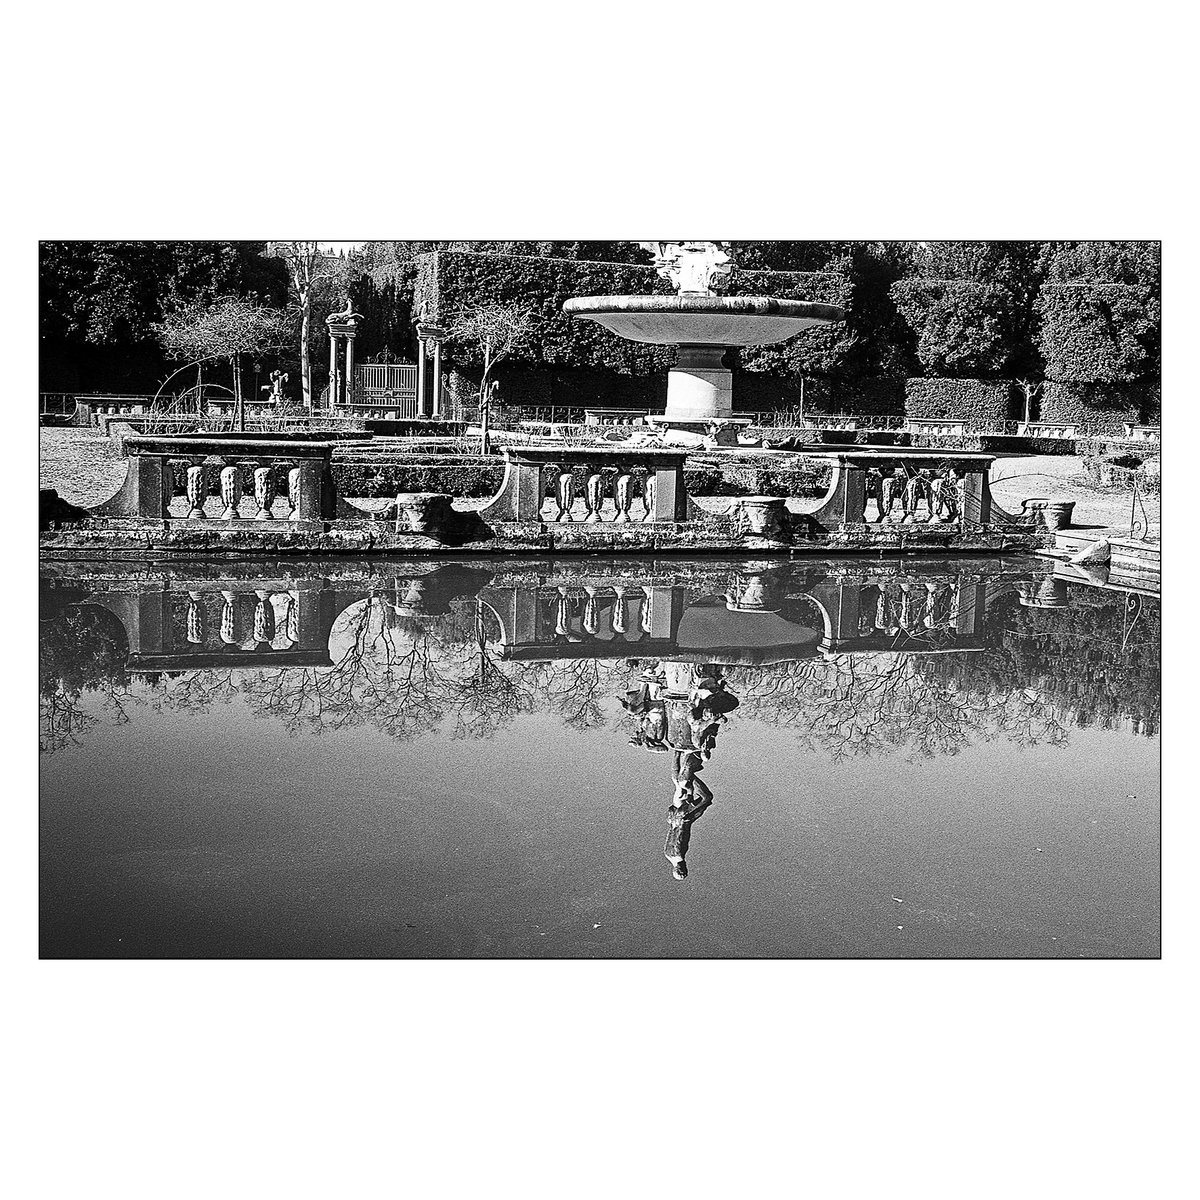 #boboli #firenzepersempre #rodinal #paesaggioitaliano #fotografiaanalogica #35mmfilmphotography #italianart